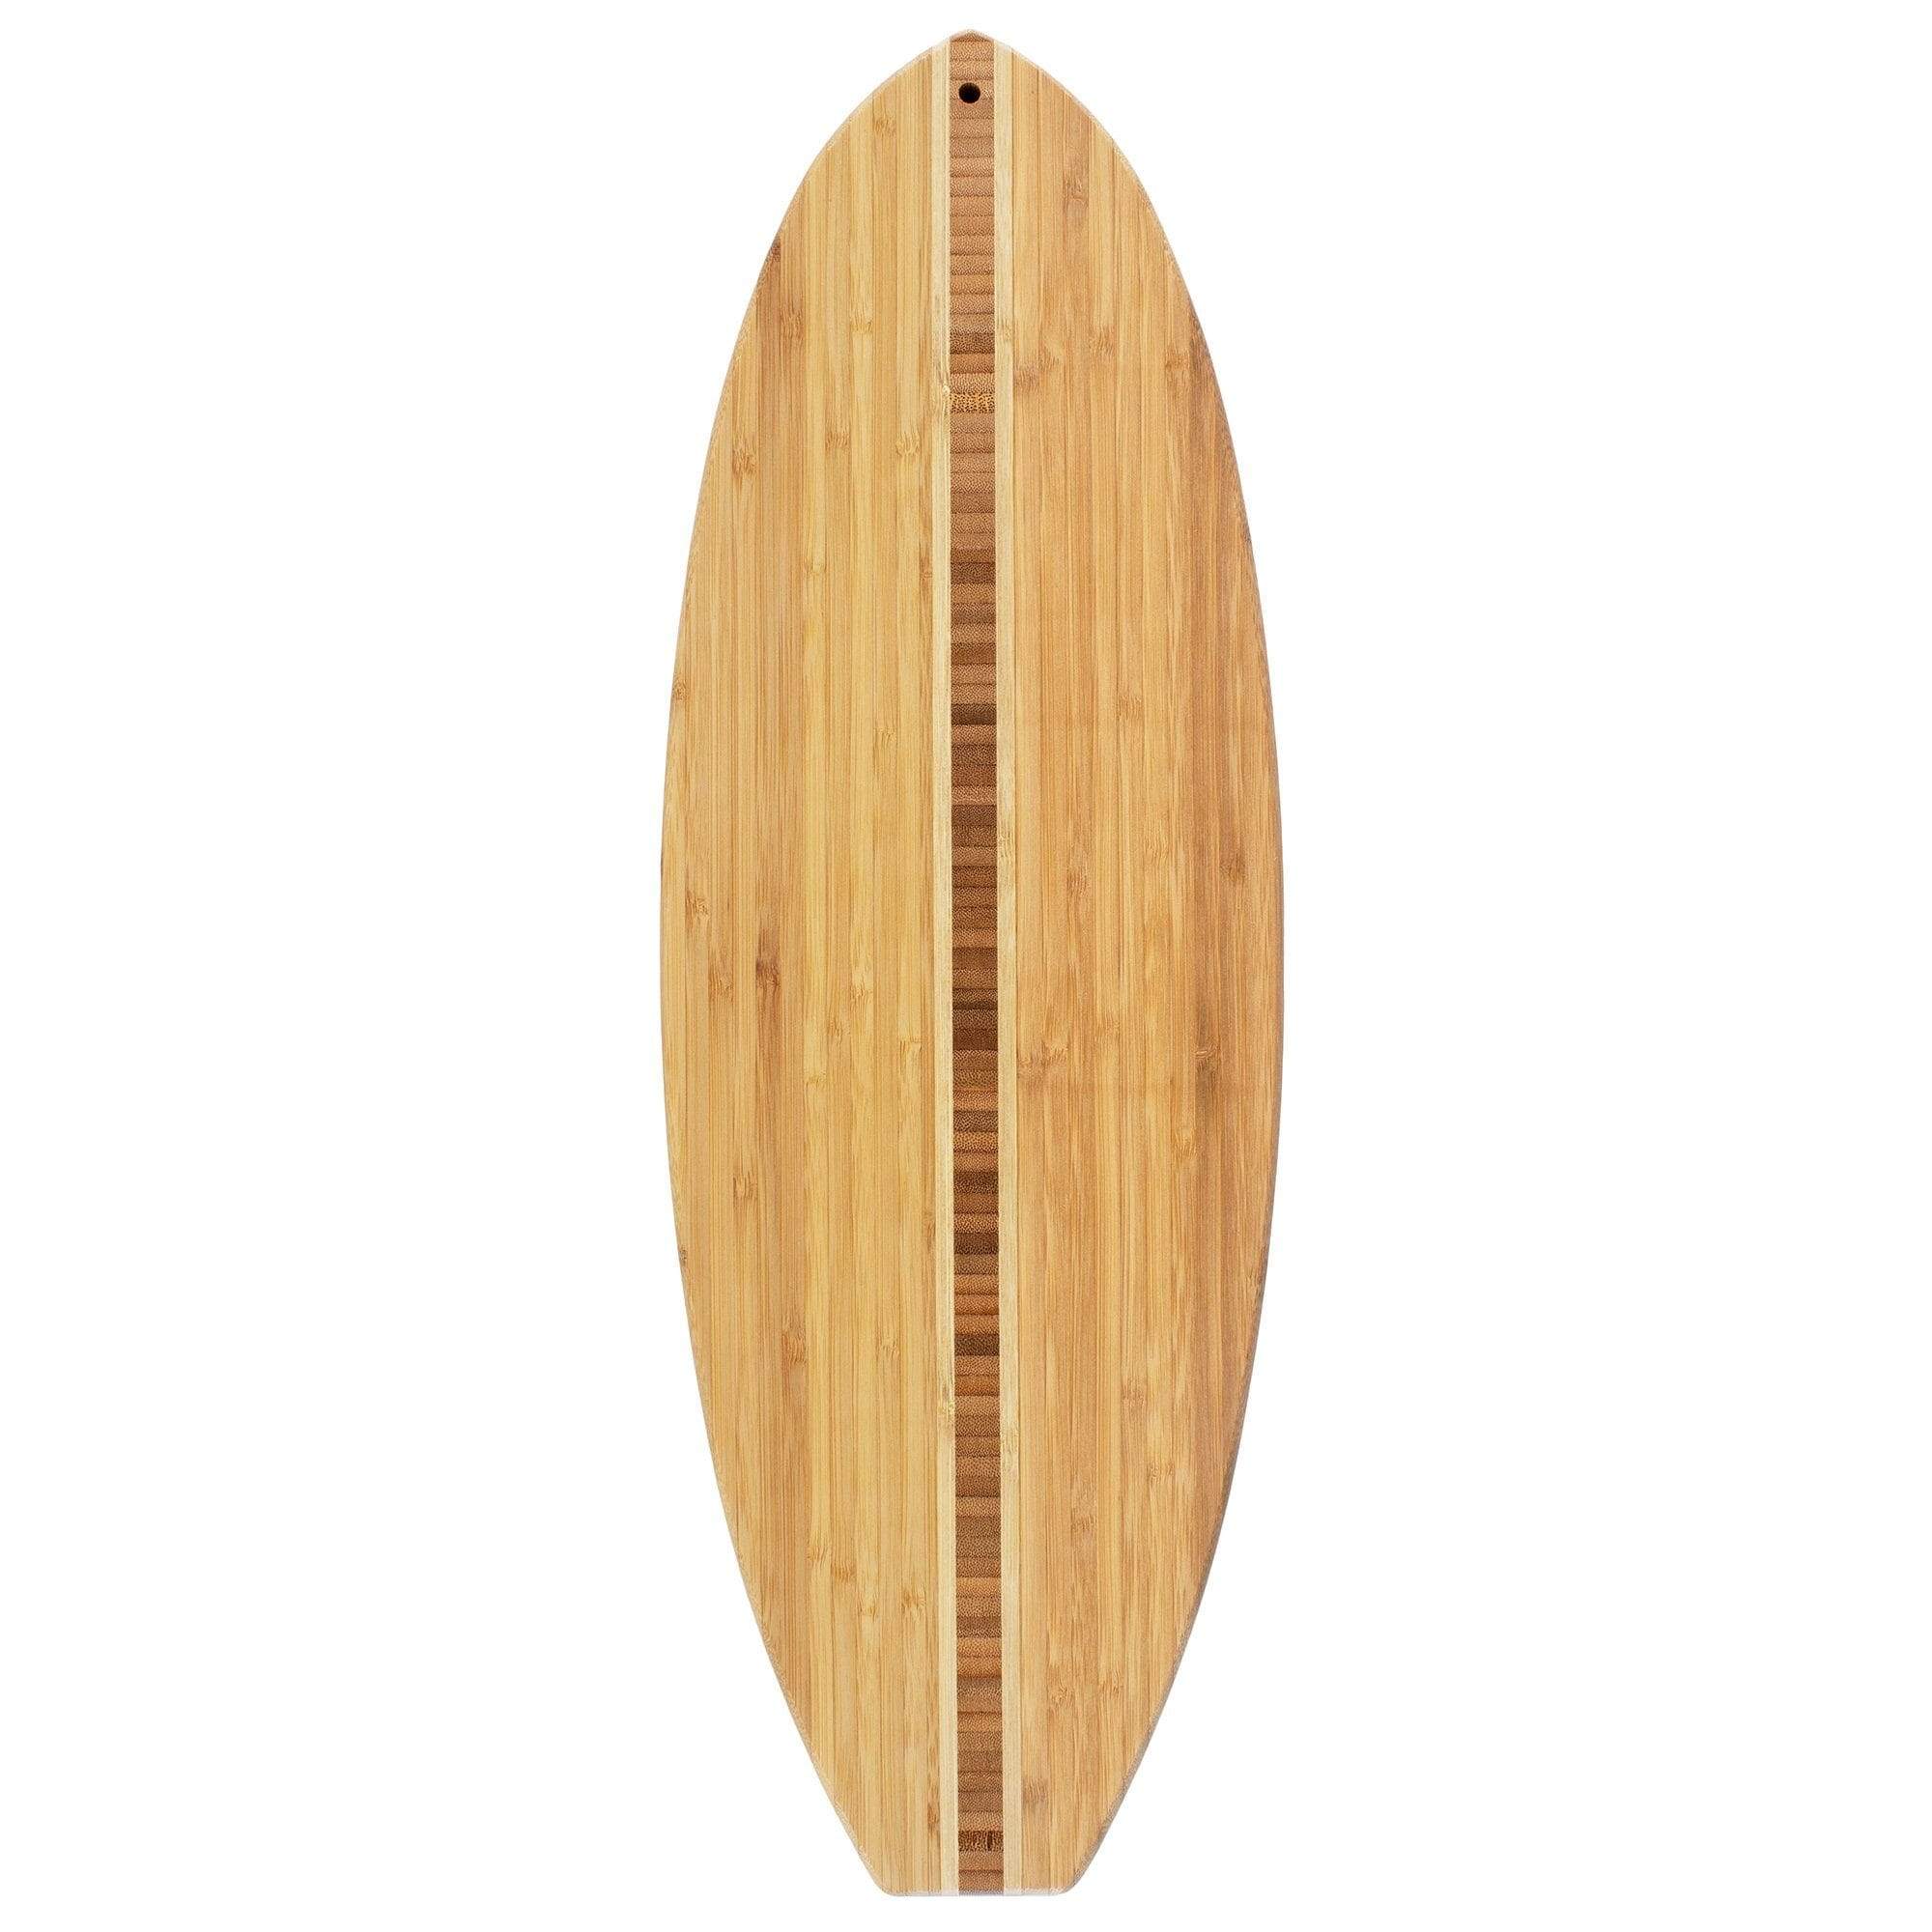 Totally Bamboo Cutting Board